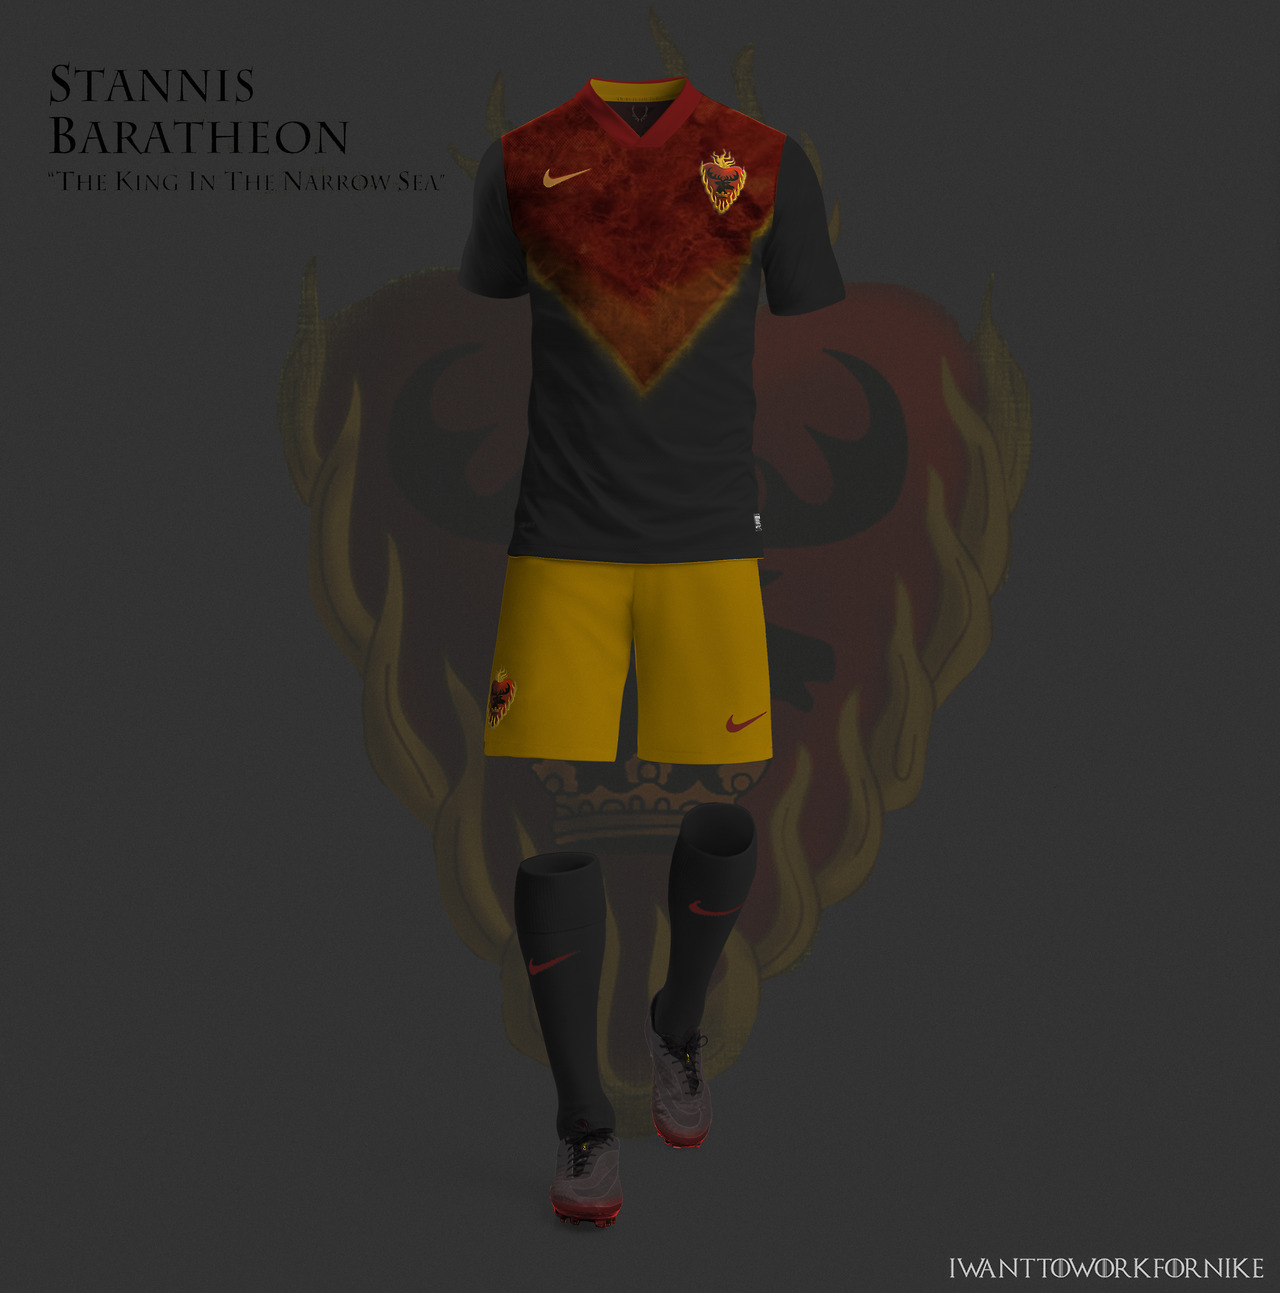 Soccer jerseys for Westeros